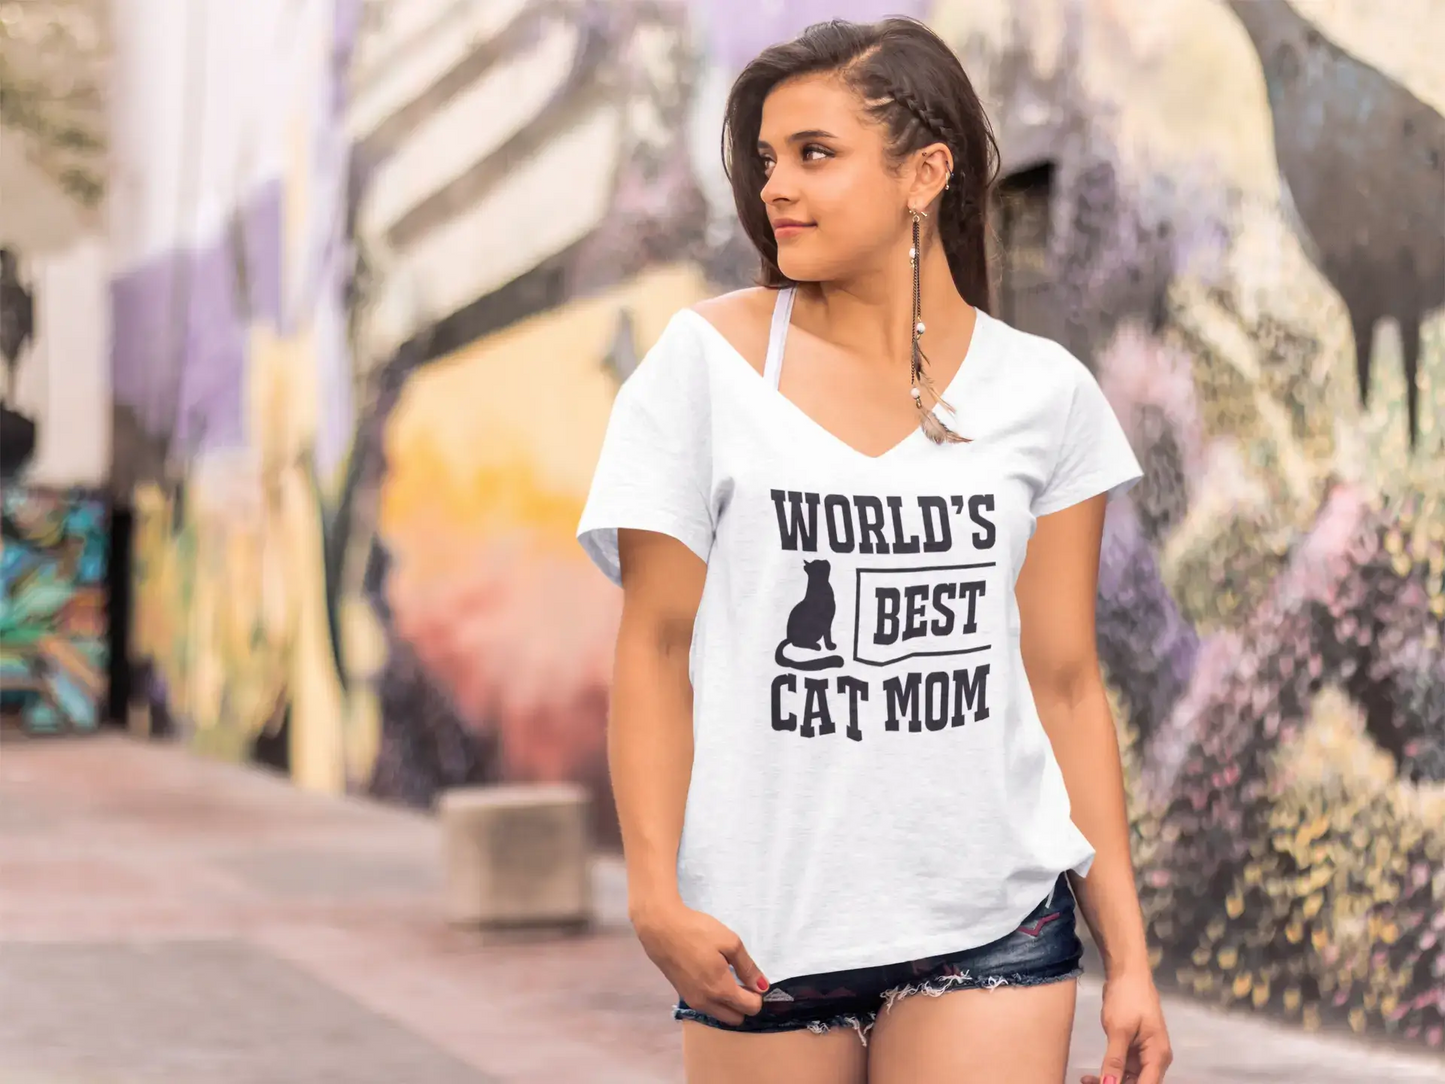 ULTRABASIC Women's T-Shirt World's Best Cat Mom - Mother's Gift Tee Shirt Tops